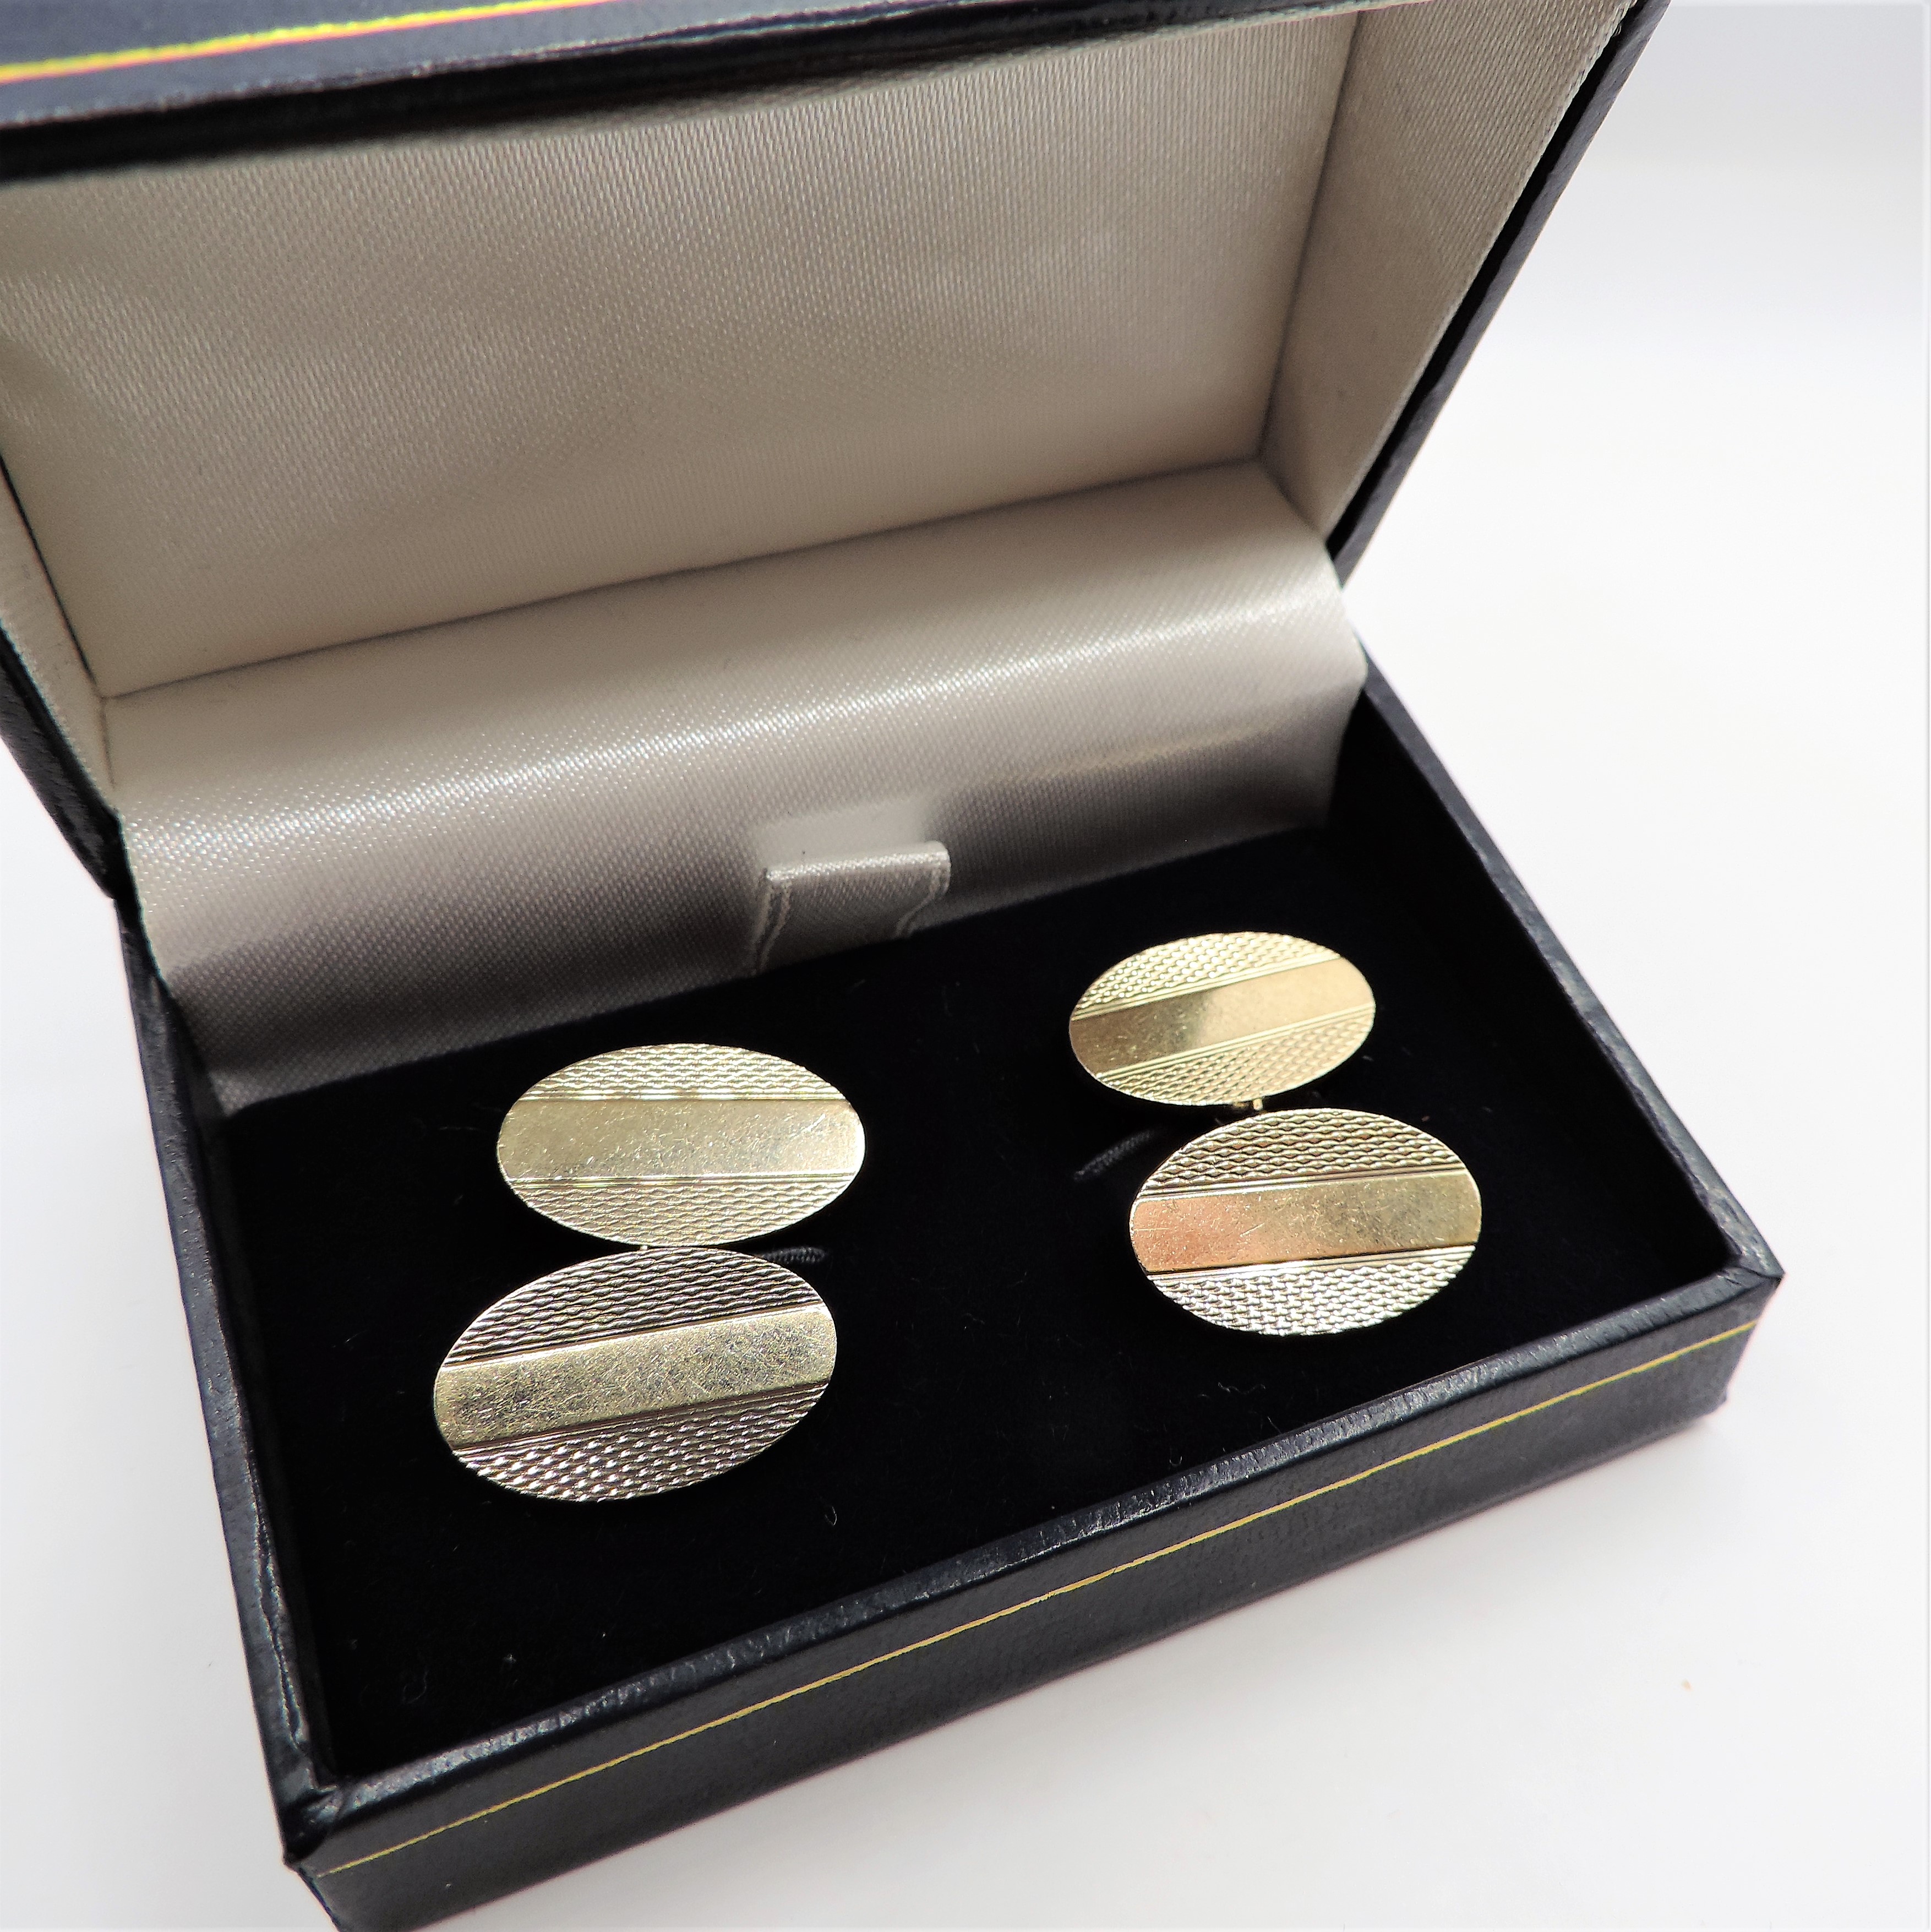 Vintage 9k Gold on Sterling Silver Cufflinks Birmingham Hallmark 1962 with Gift Box - Image 2 of 4